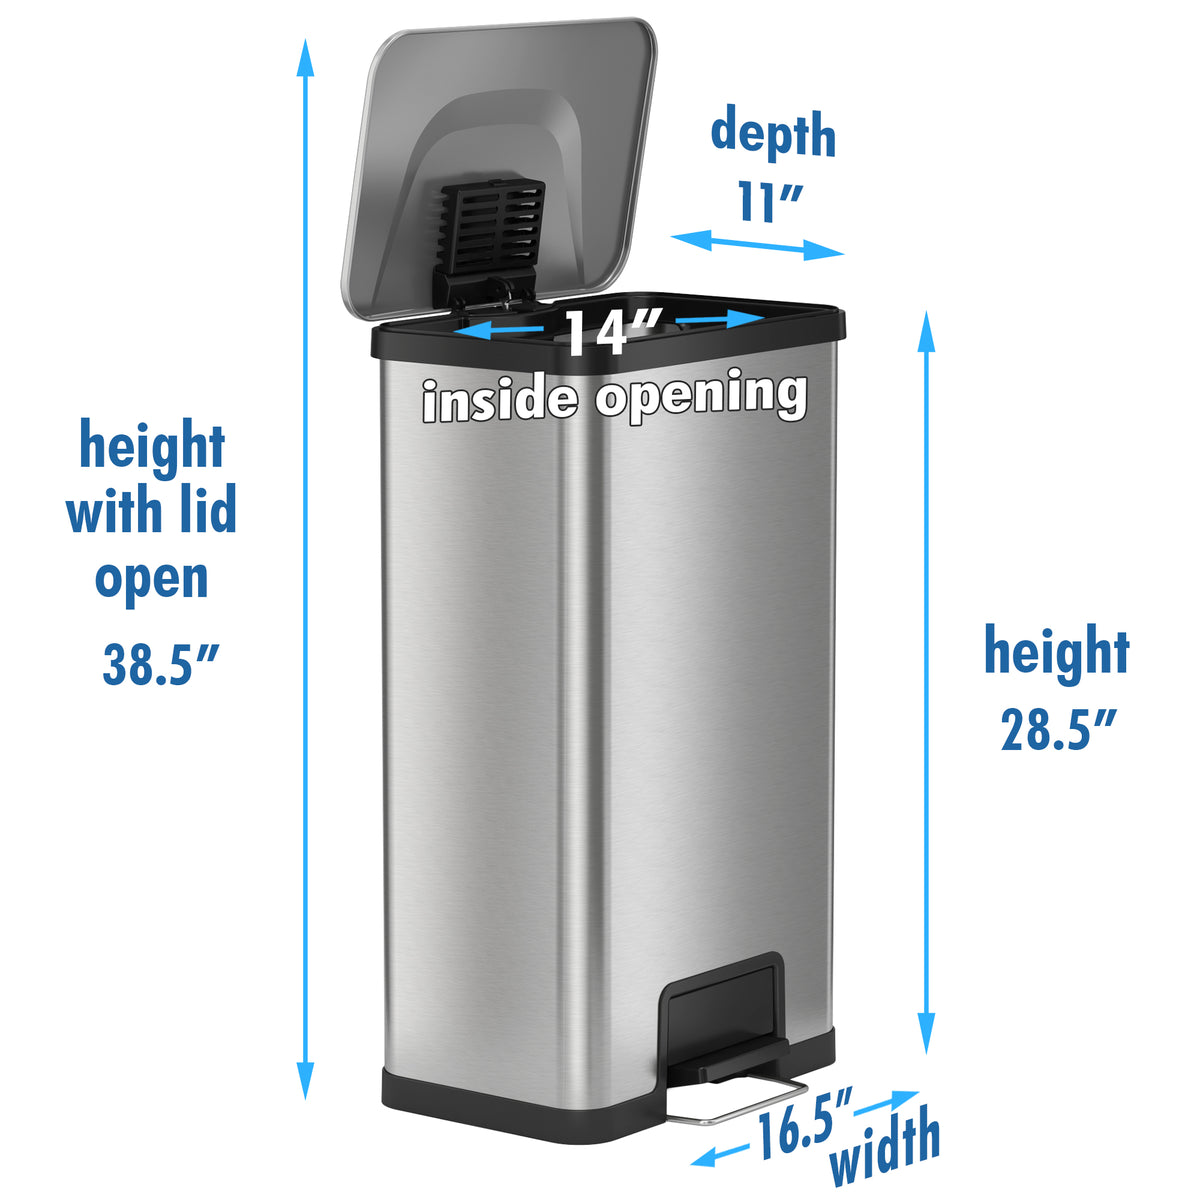 18 Gallon / 68 Liter AirStep Step Pedal Trash Can dimensions